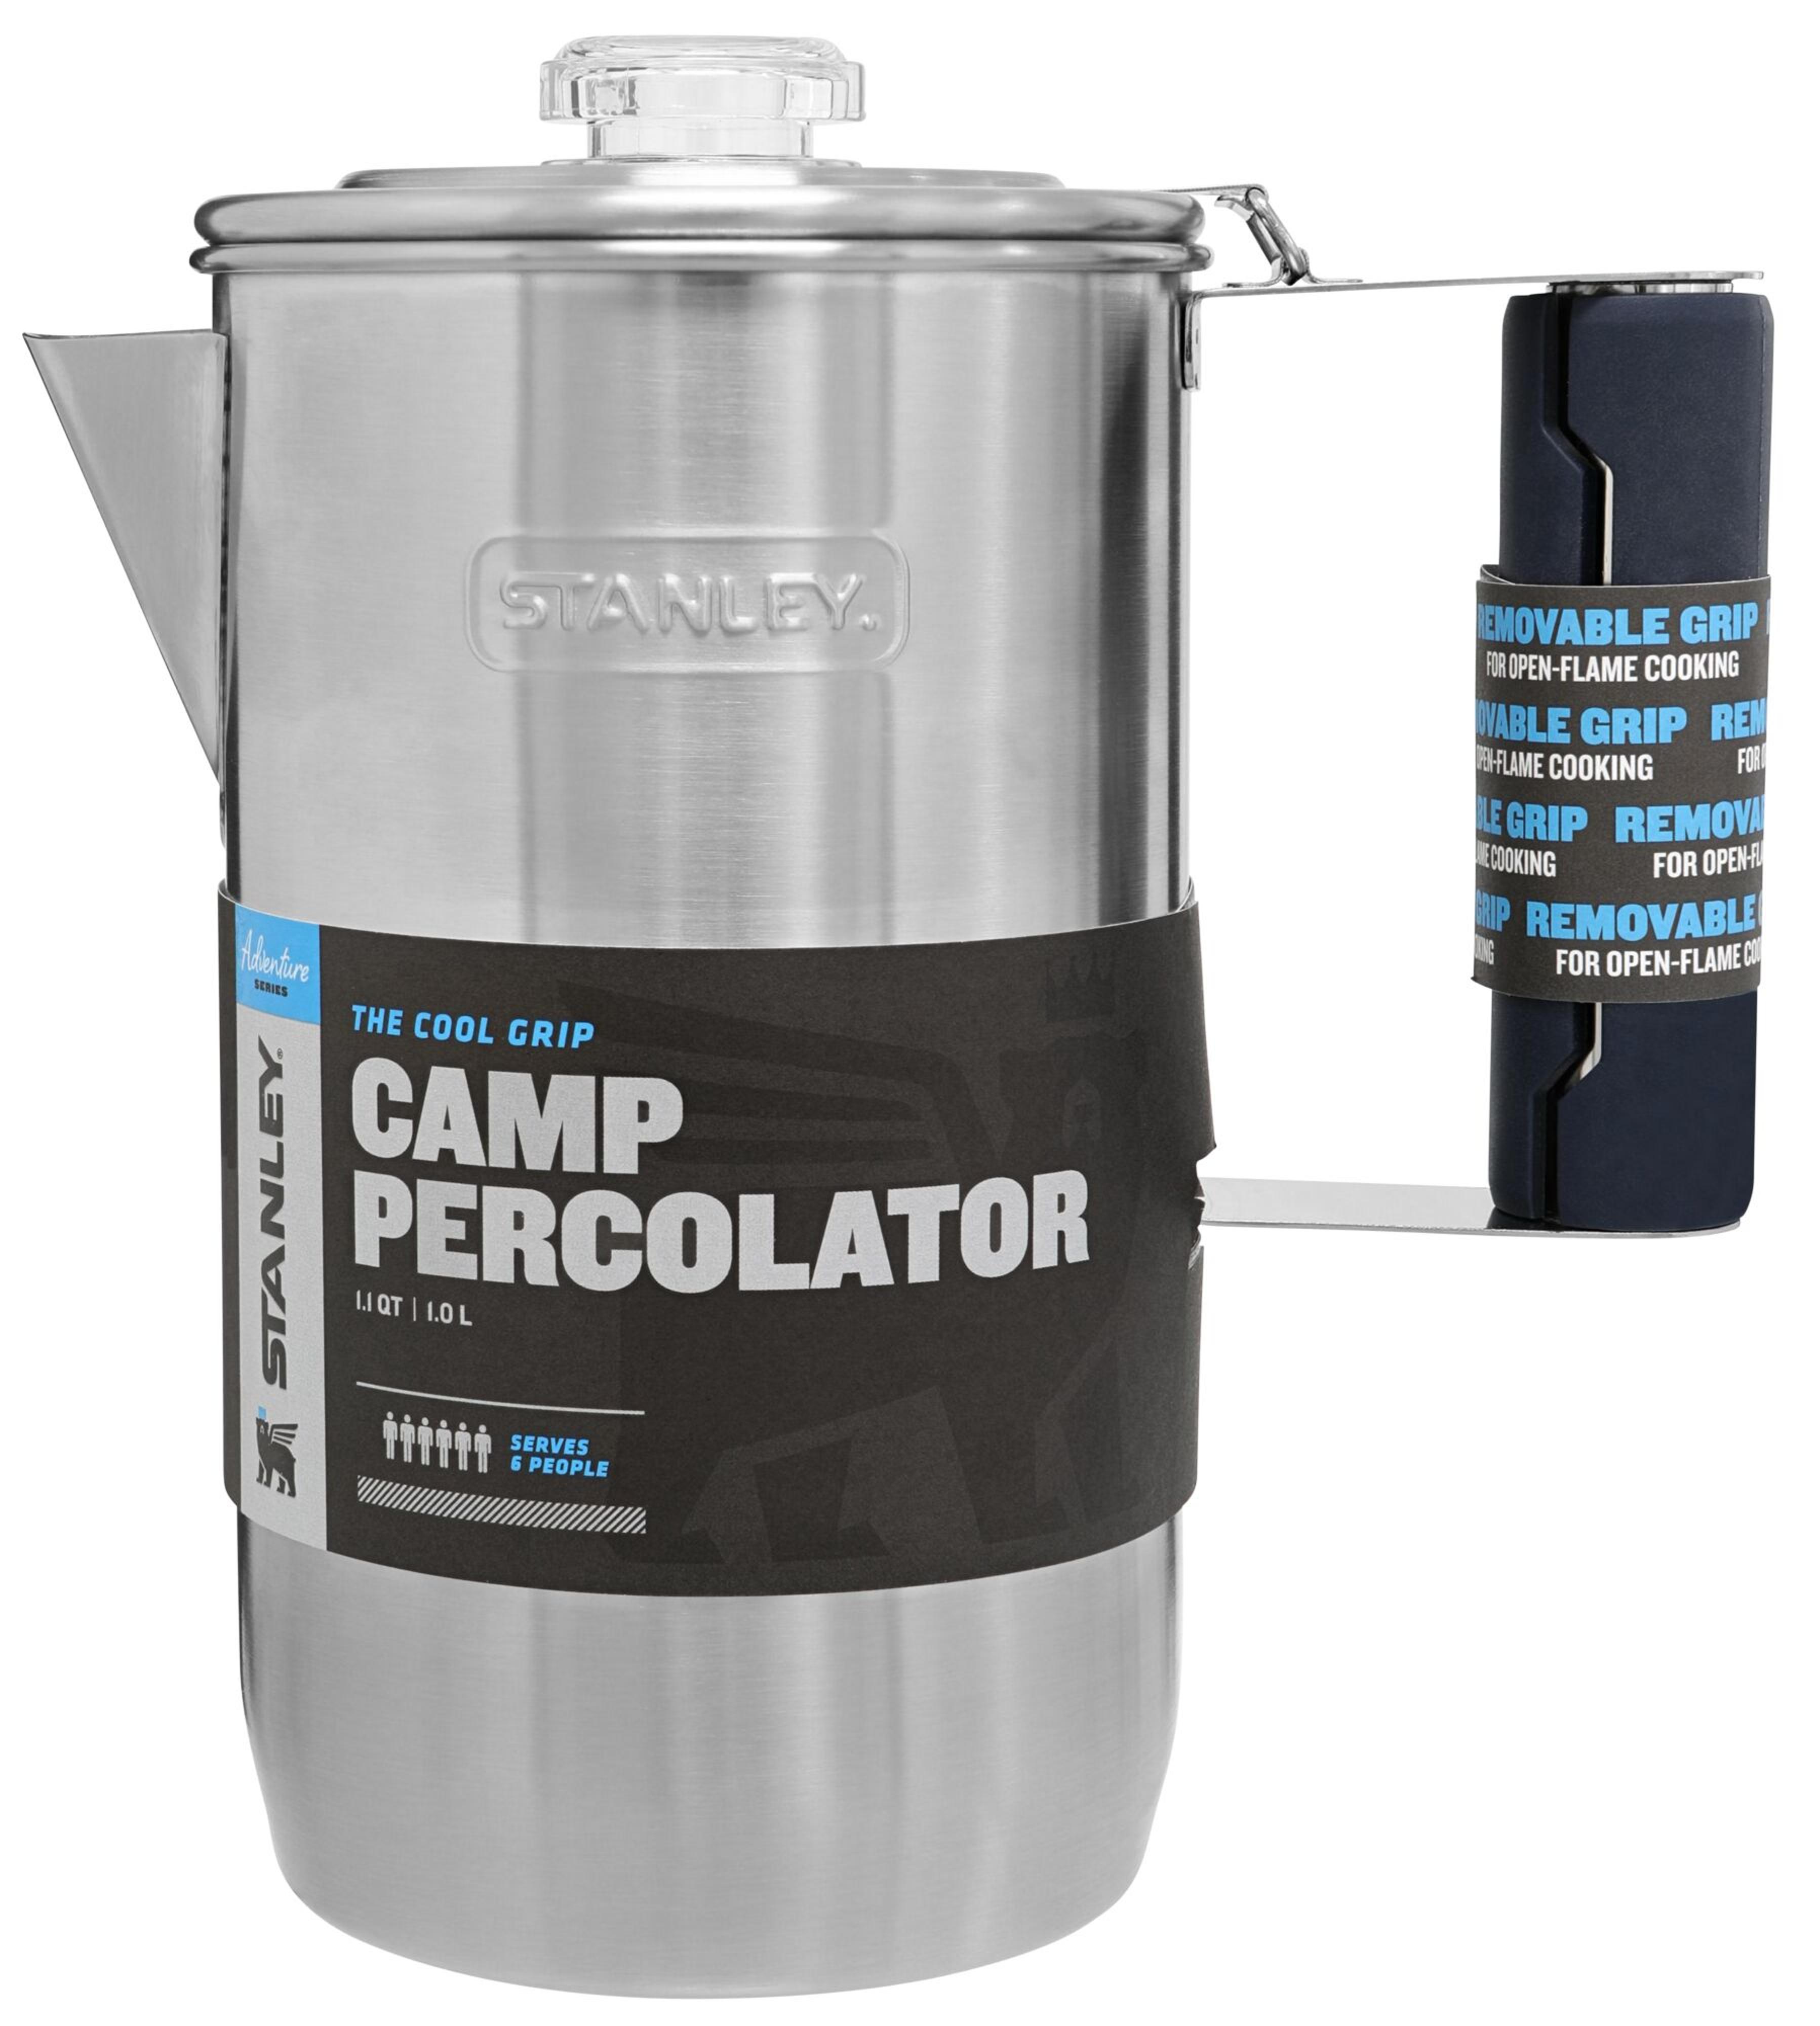 Adventure Cool Grip Camp Percolator, 1.1 qt Coffee Pot